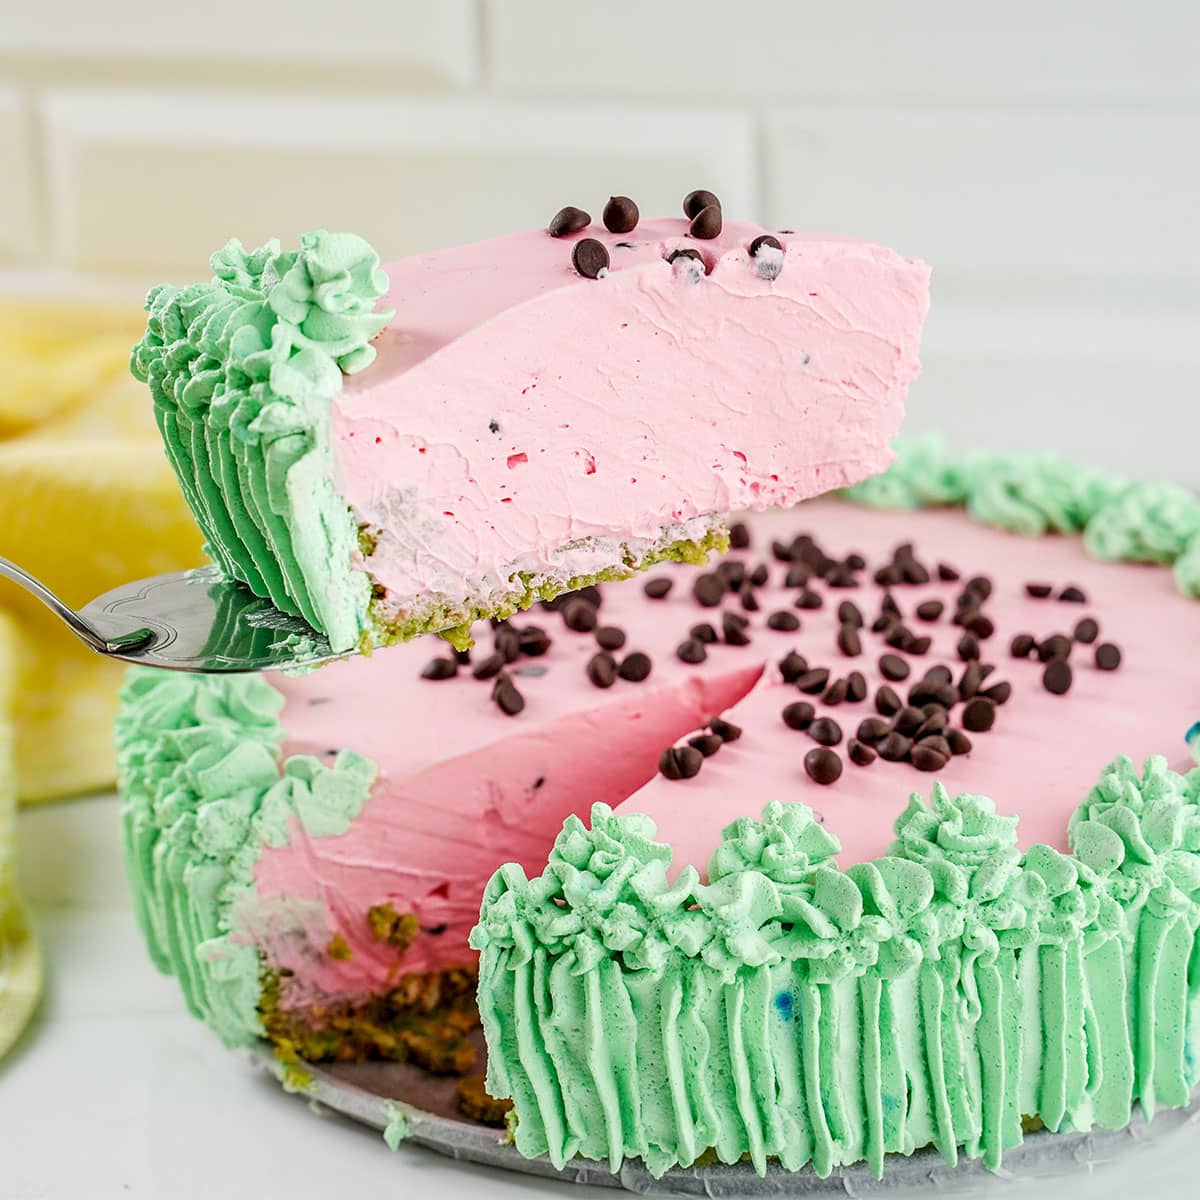 fresh cut slice of Watermelon Cheesecake on cake slicer.